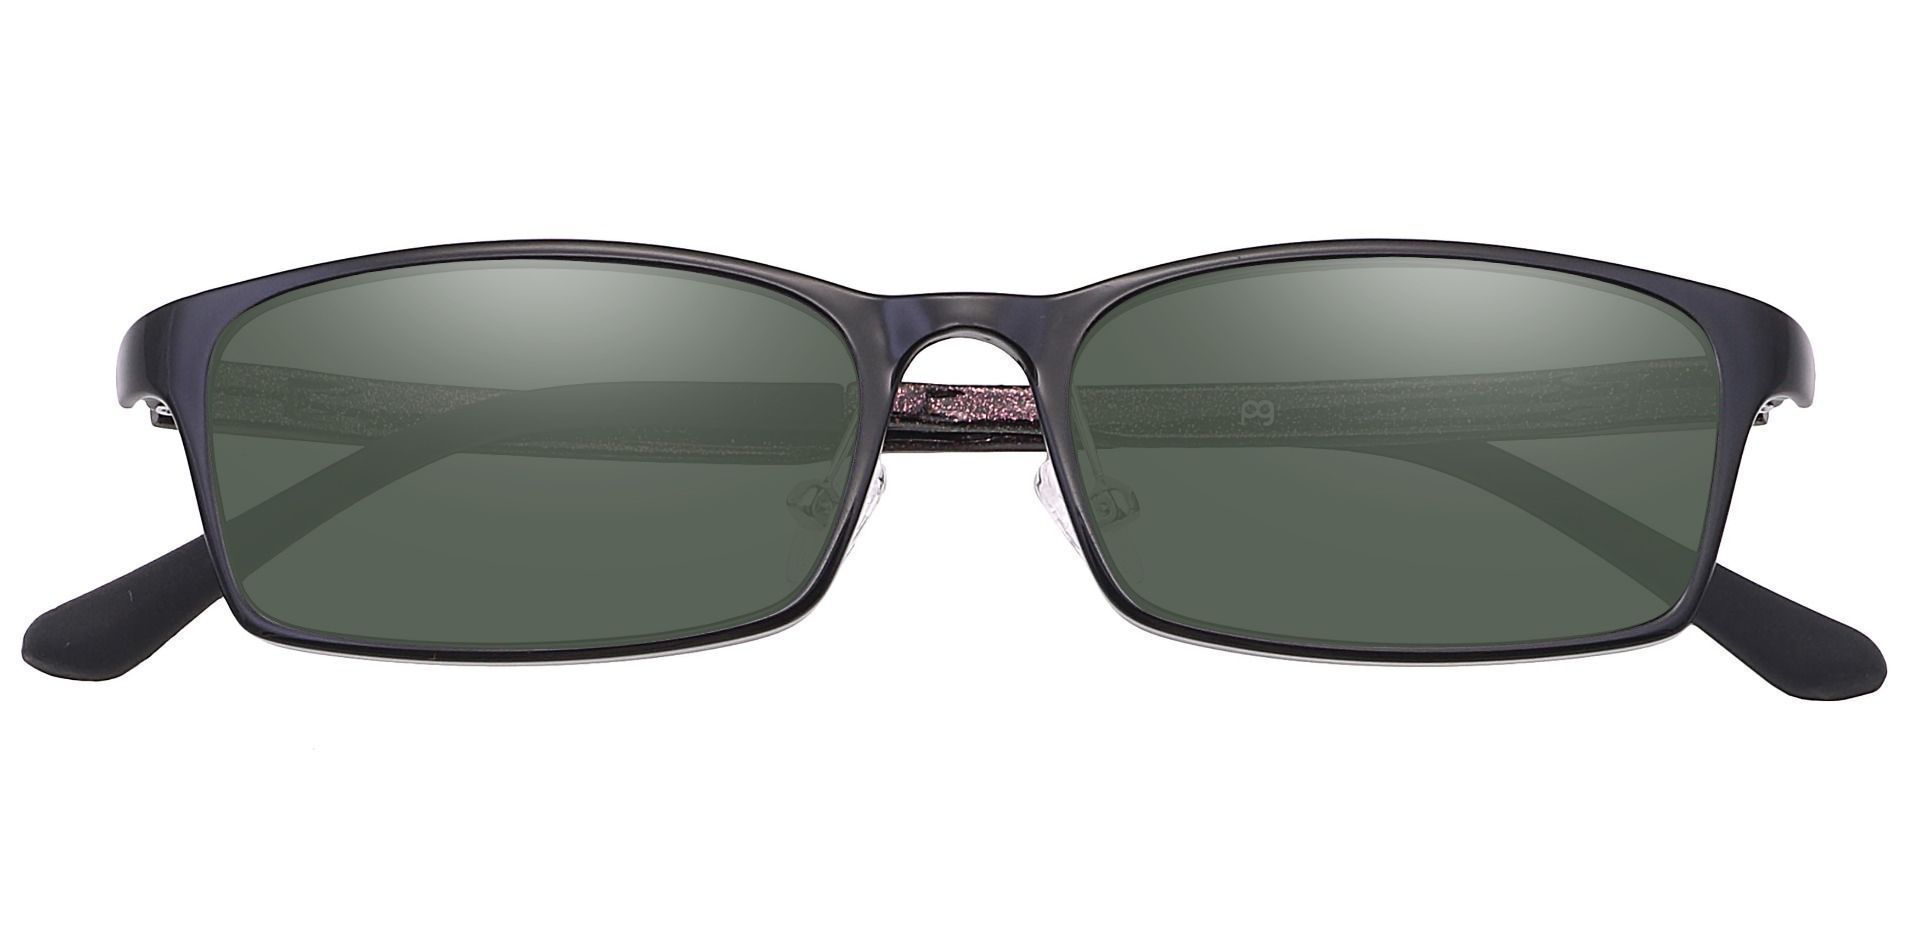 Hydra Rectangle Progressive Sunglasses - Black Frame With Green Lenses